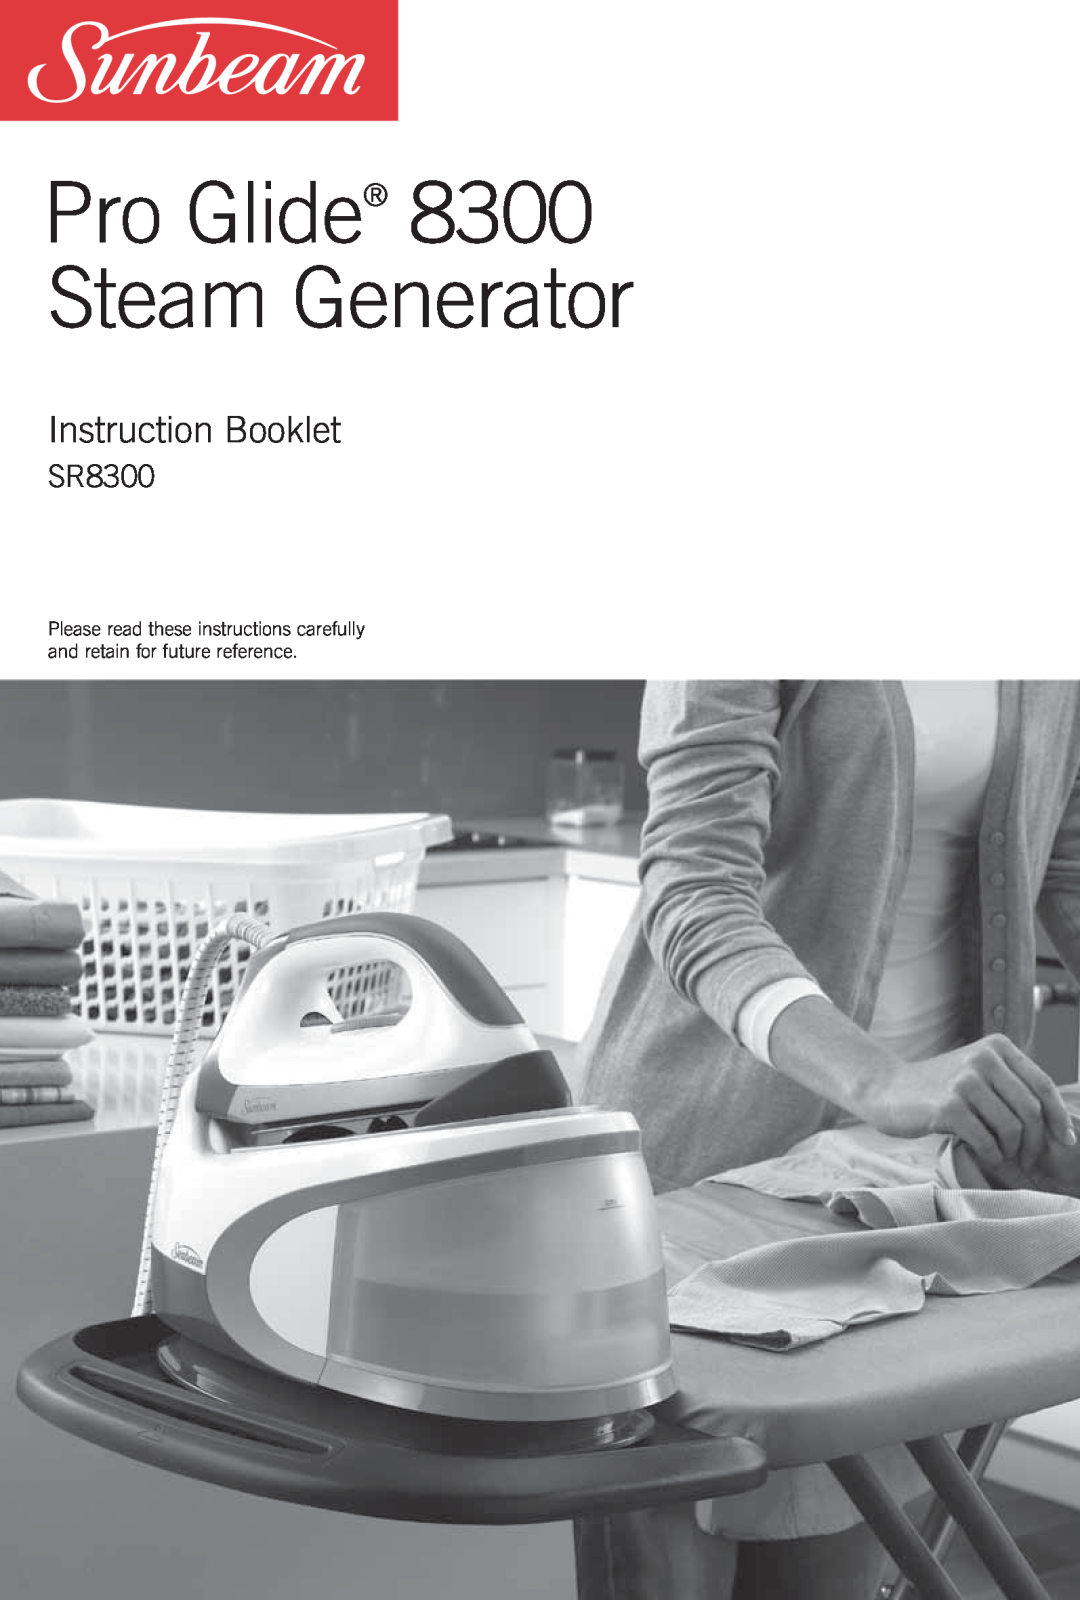 Sunbeam manual SR8300, Pro Glide 8300 Steam Generator, Instruction Booklet 